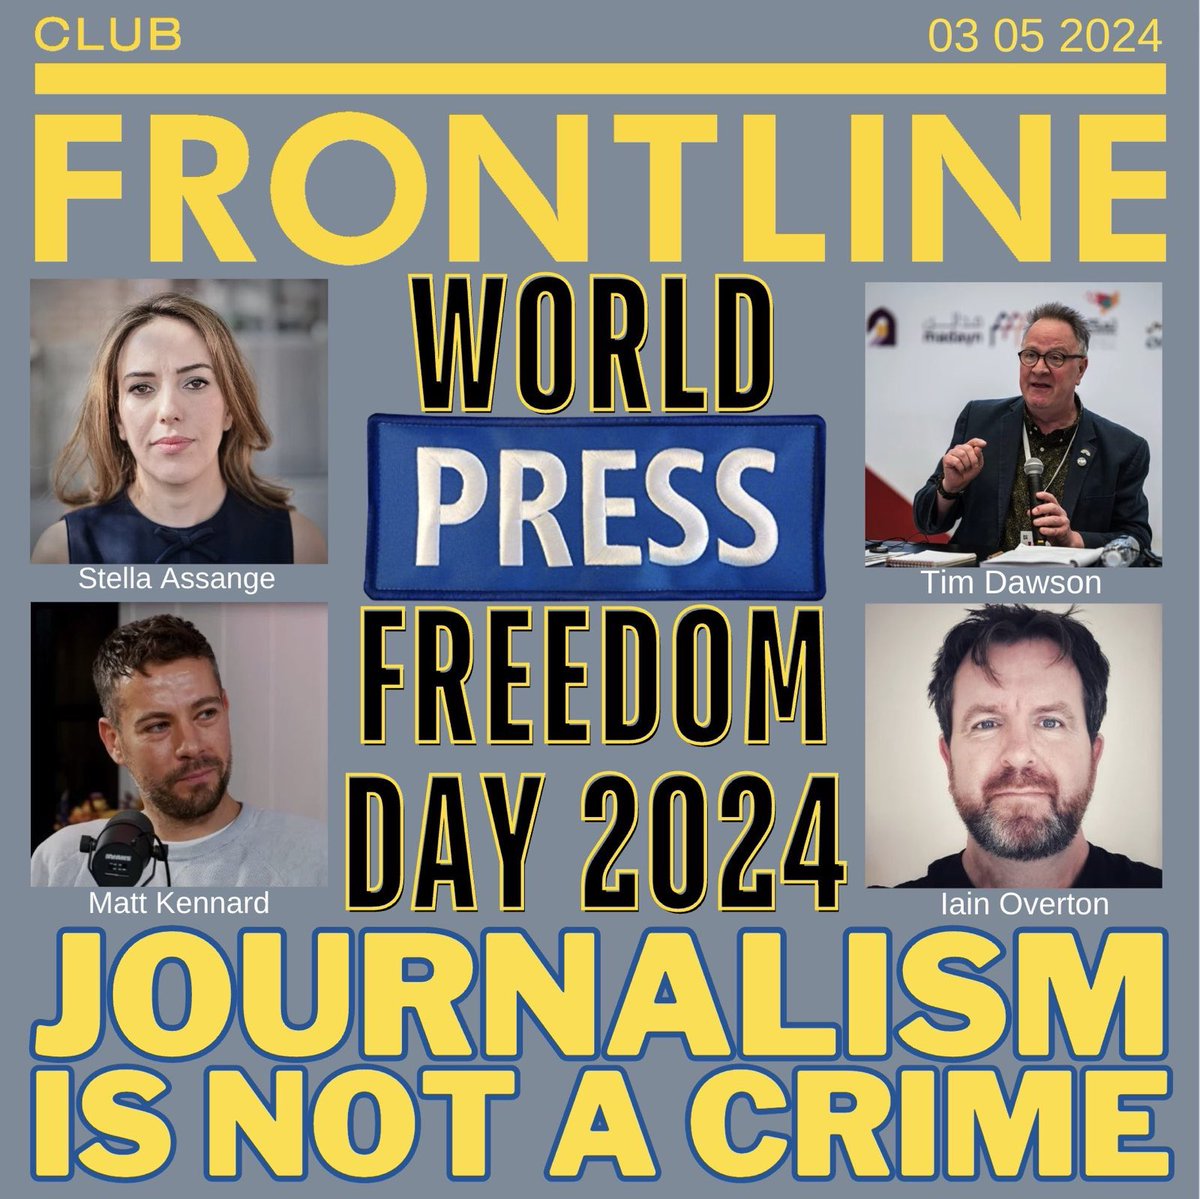 Join me on Friday for World Press Freedom Day, with @TimDawsn @iainoverton @kennardmatt #WPFD #JournalismIsNotACrime #FreeAssangeNOW #LetHimGoJoe @frontlineclub. Tickets: eventbrite.co.uk/e/journalism-i…